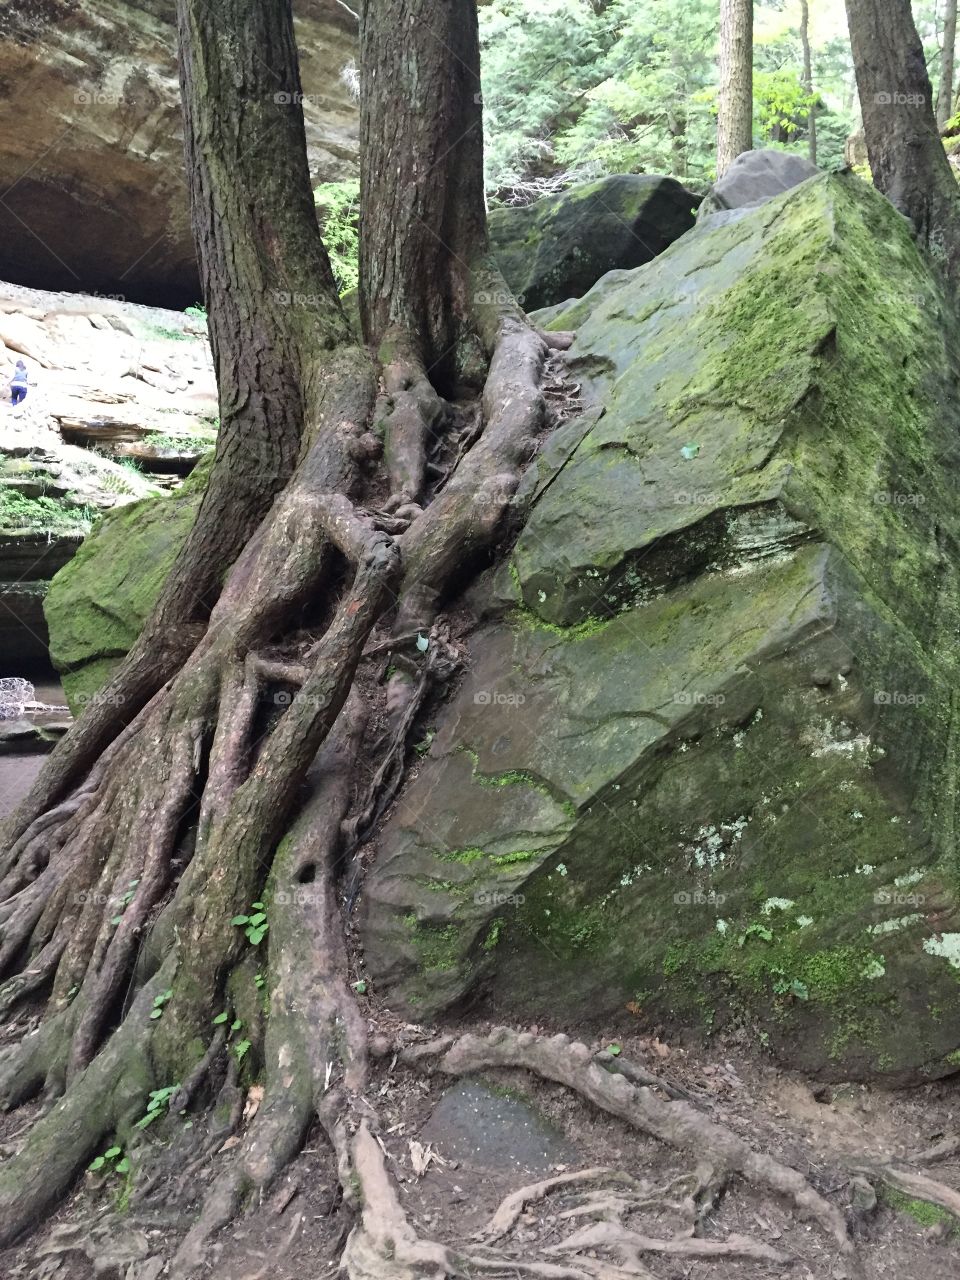 Trees growing on rocks